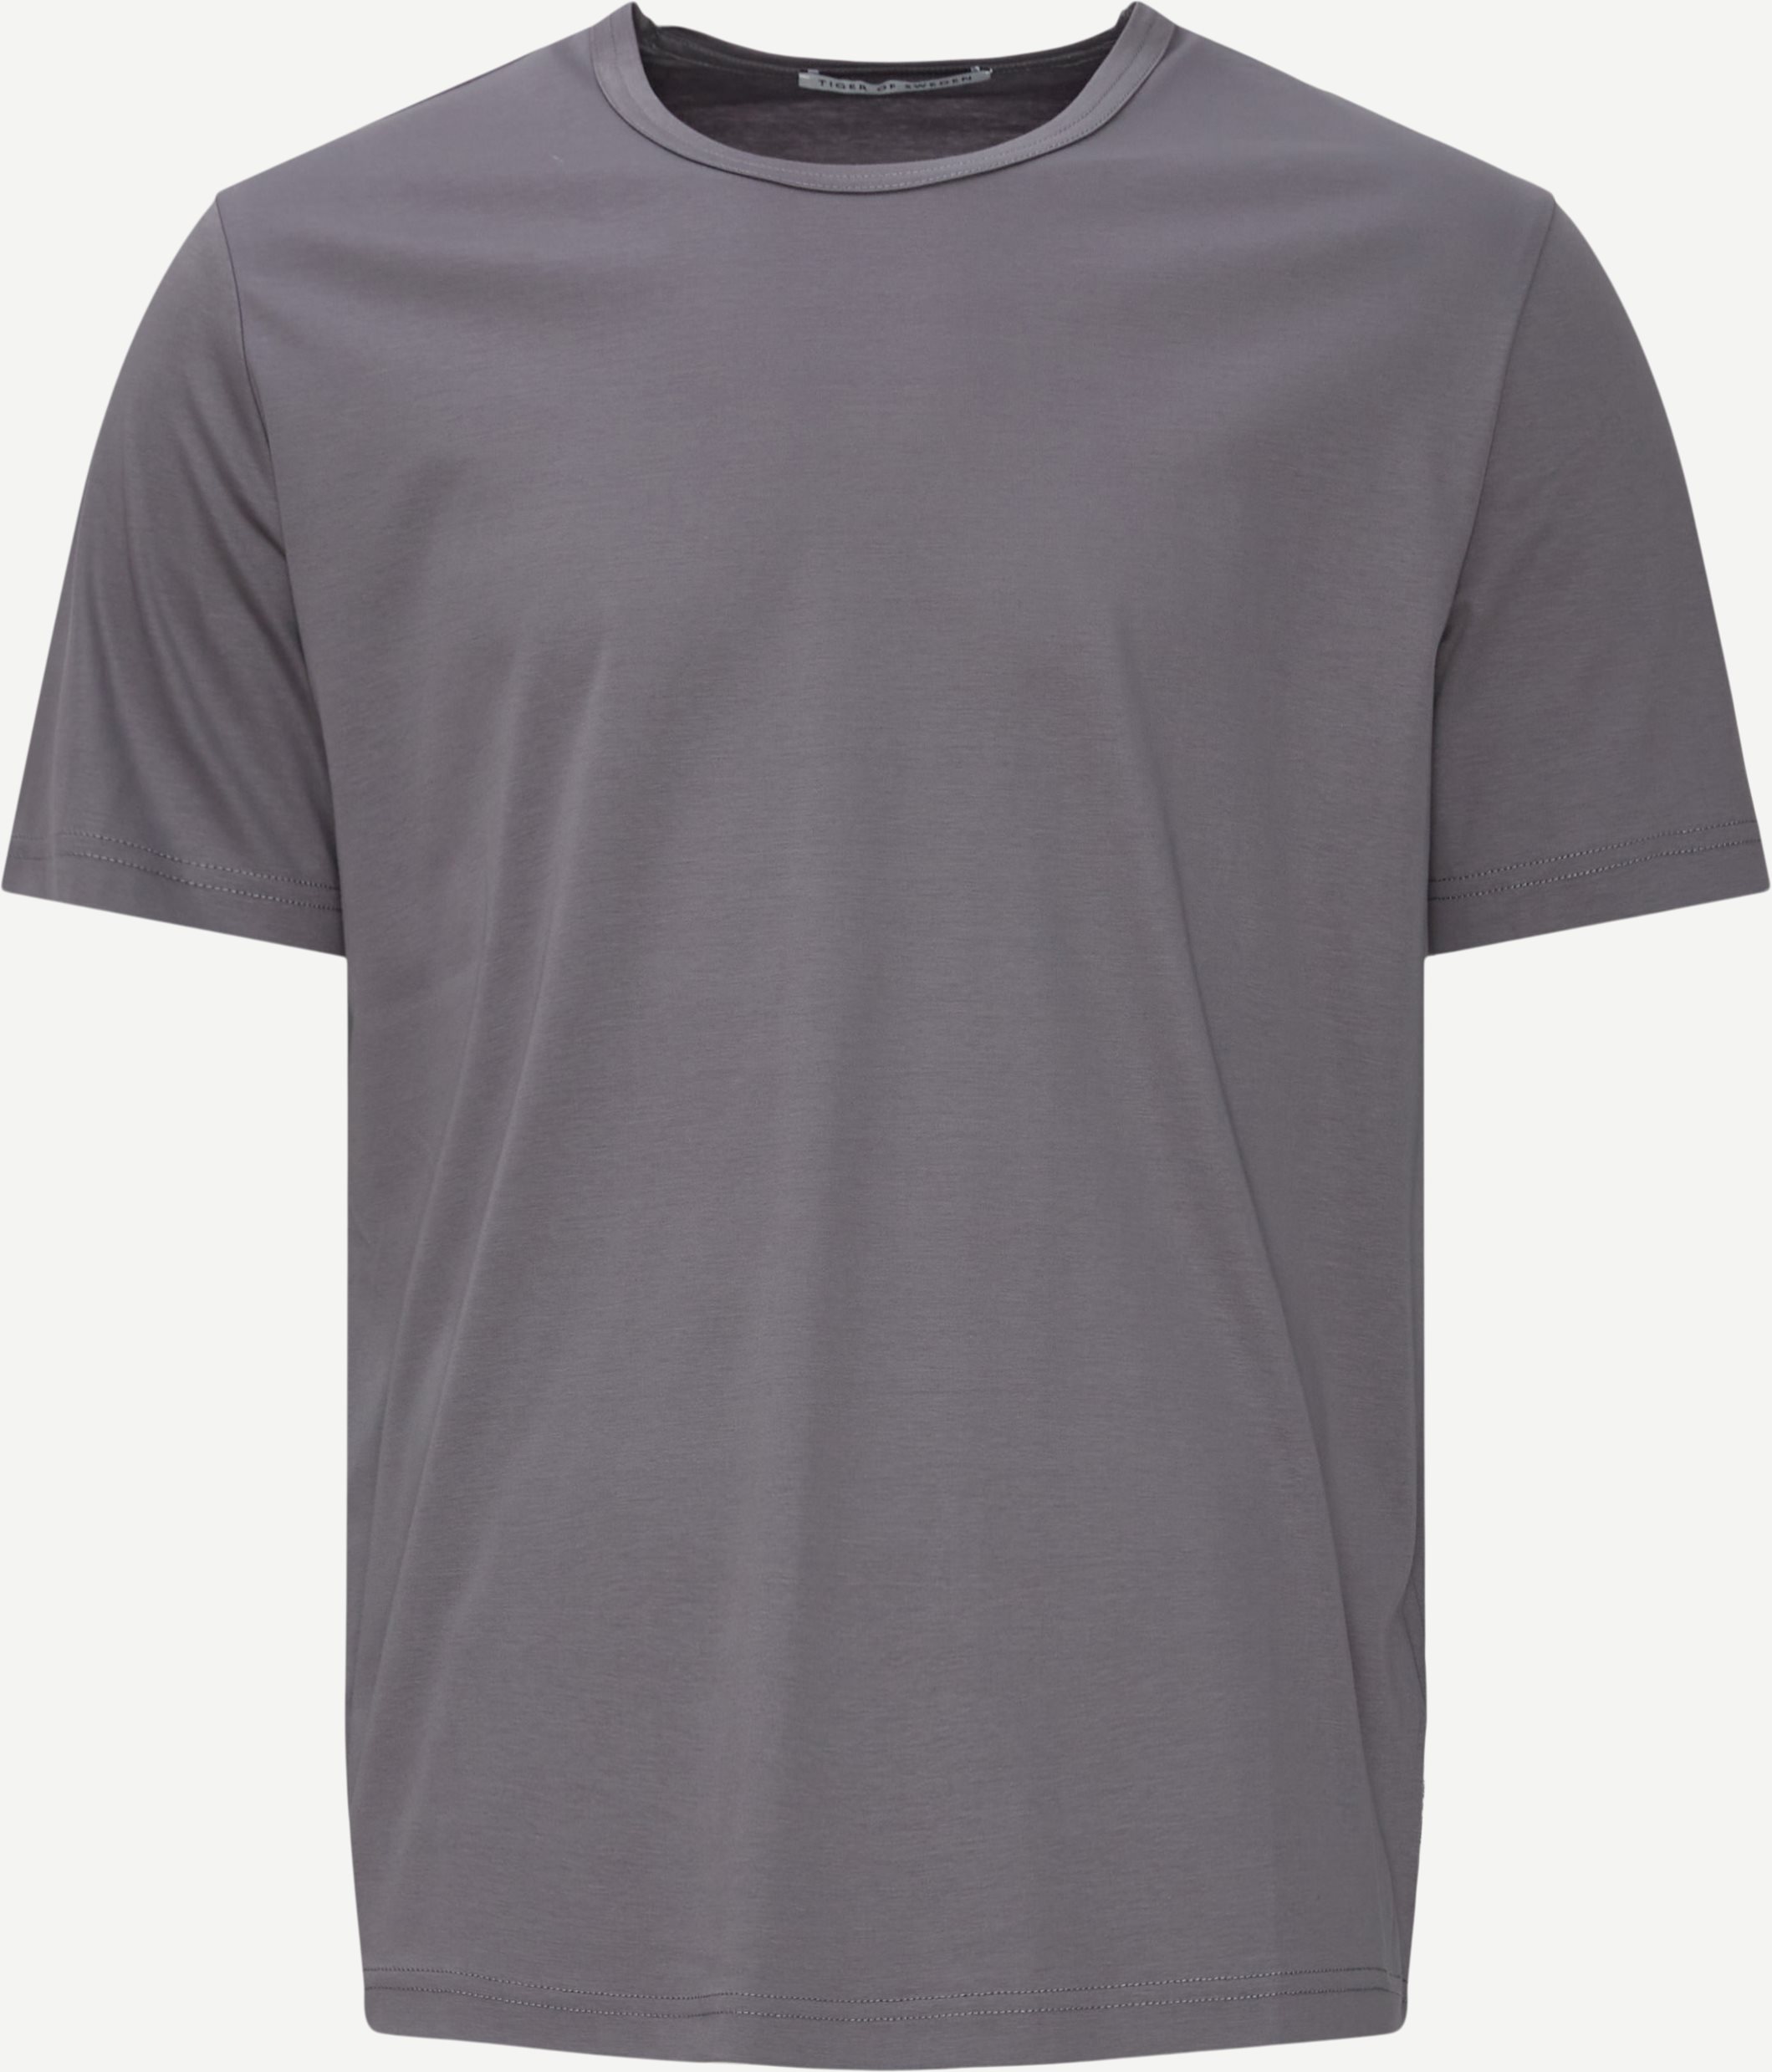 Olaf T-shirt - T-shirts - Slim fit - Grå